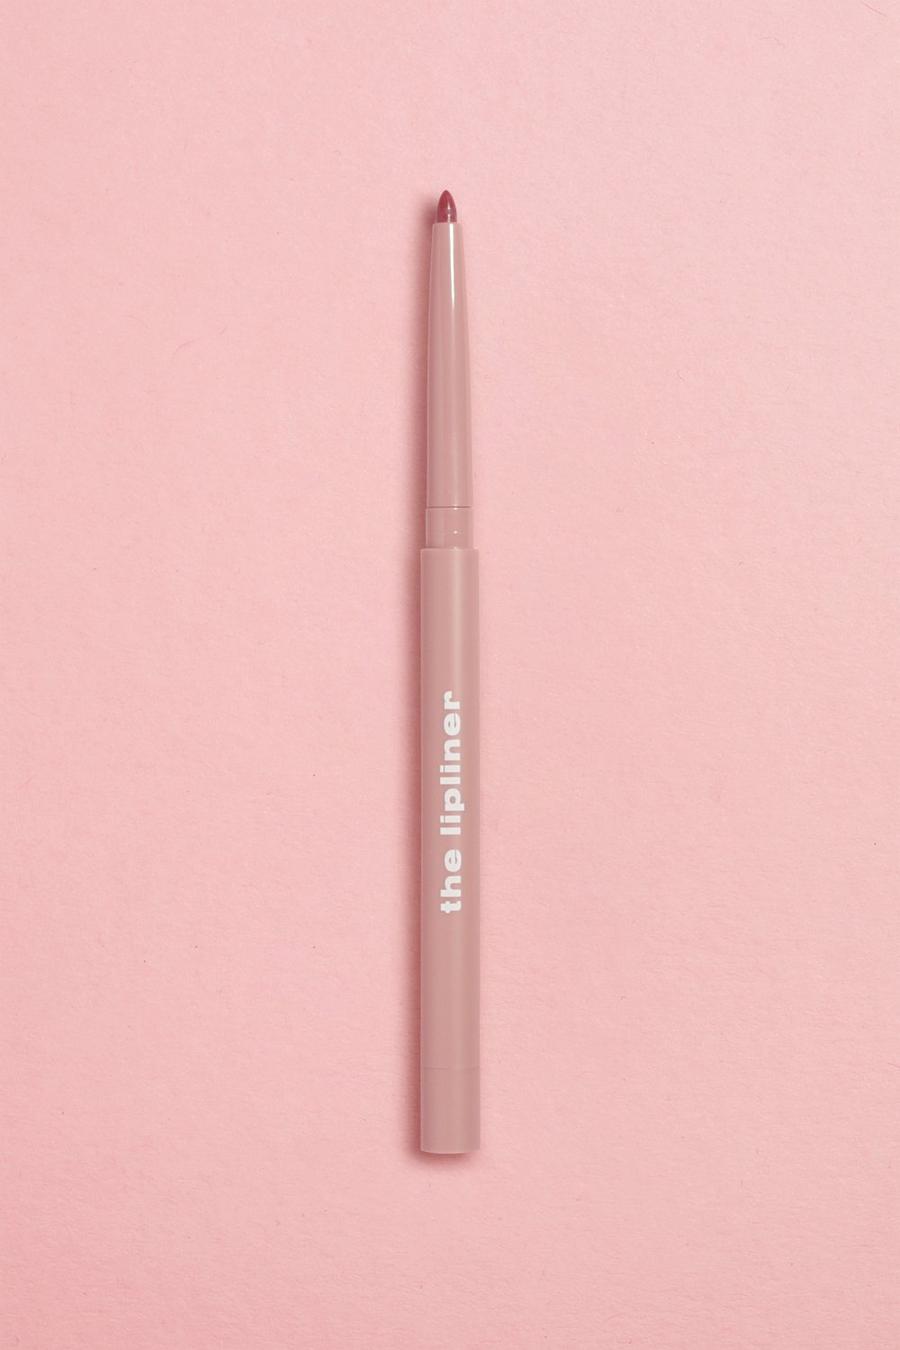 Boohoo Beauty - Le crayon à lèvres - Dark Pink image number 1